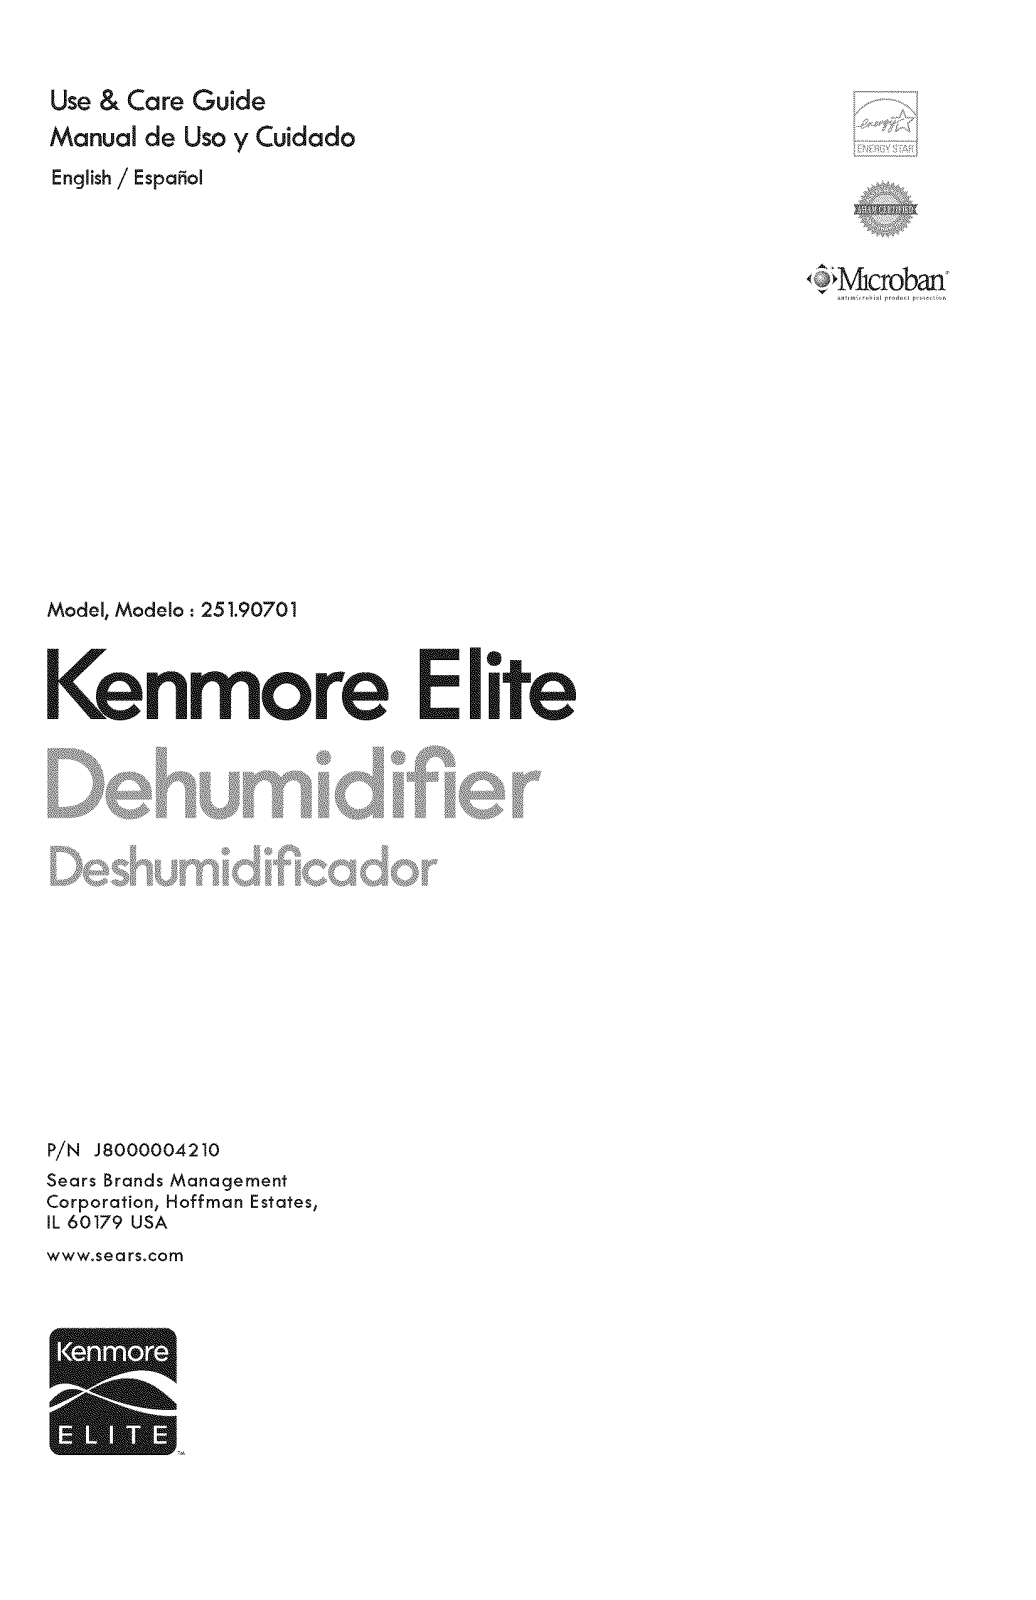 Kenmore Elite 25190701010, 25190701801 Owner’s Manual